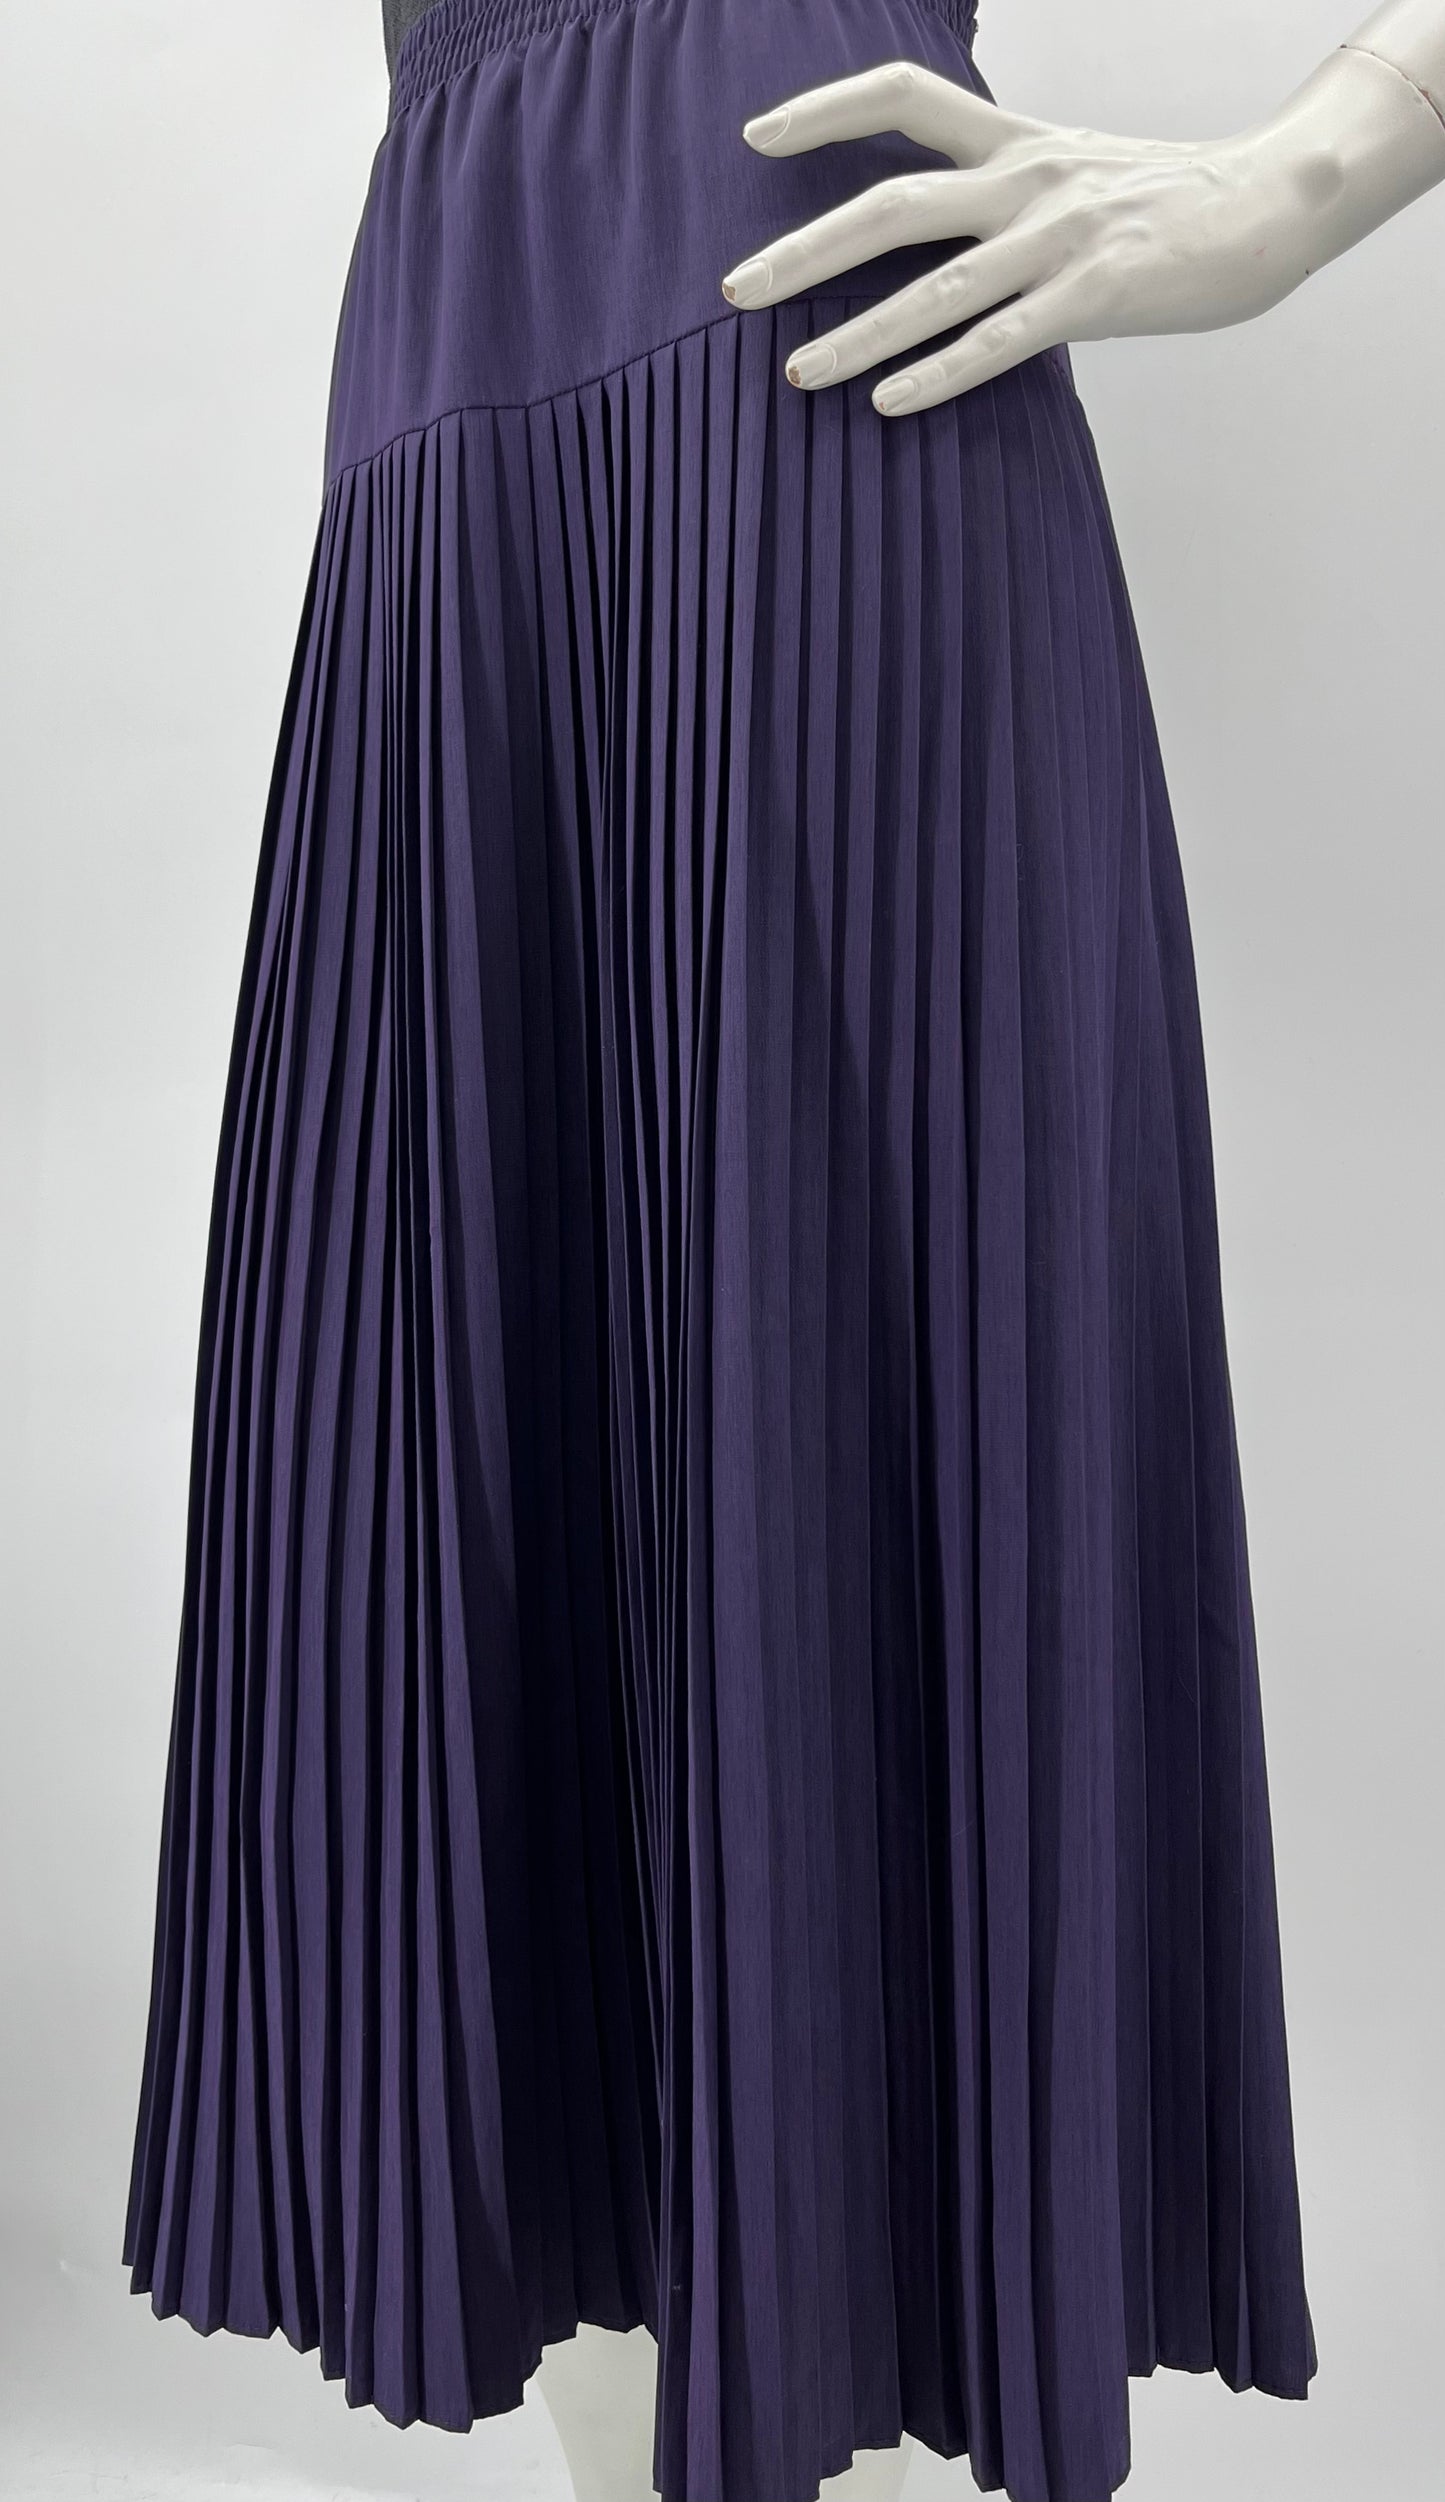 Tummanvioletti pliseerattu hame, 90-luku, vyöt.ymp. 90cm, kokoarvio 44-46